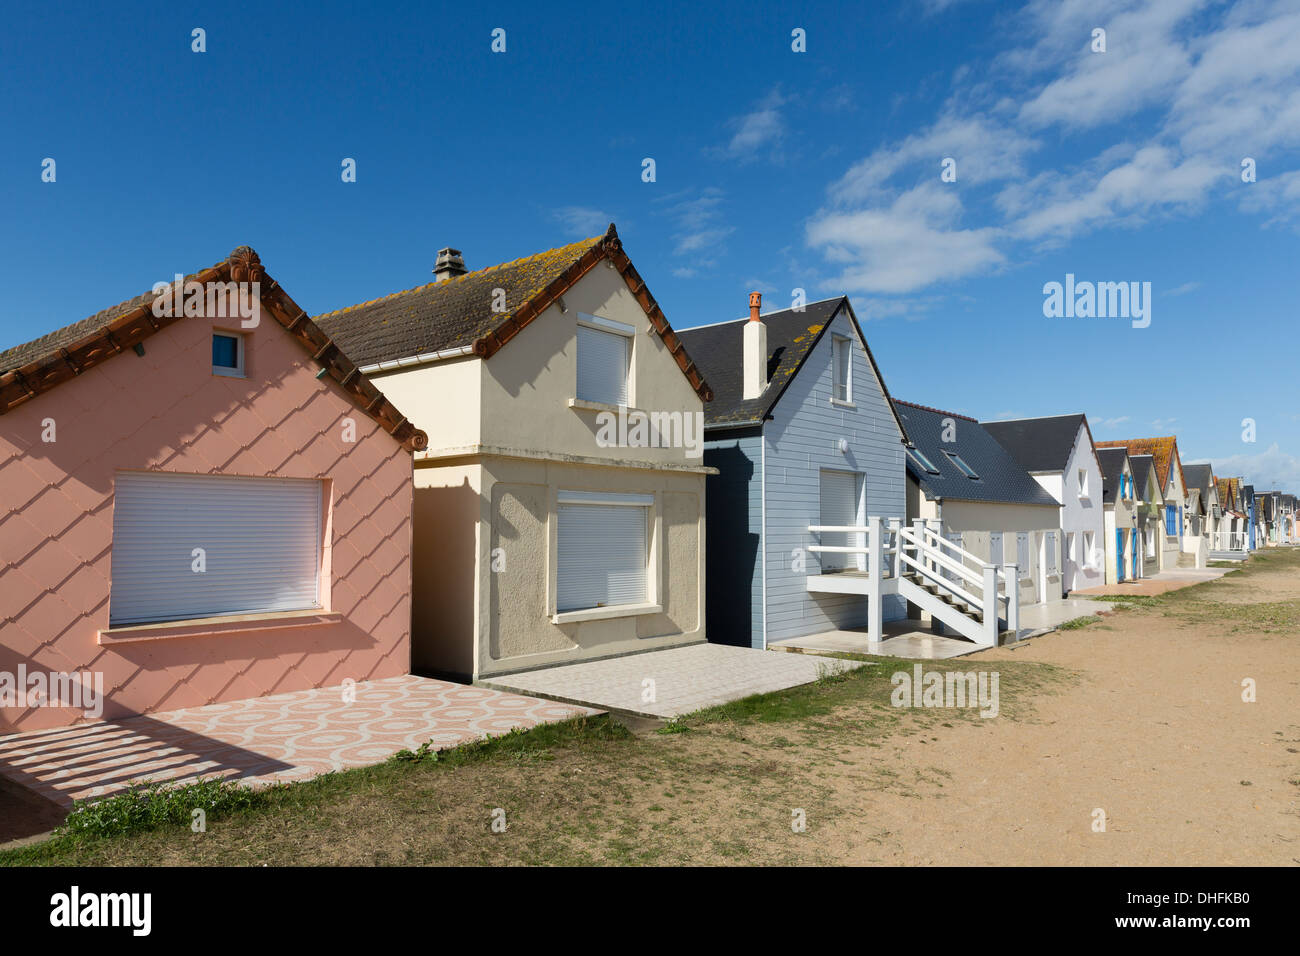 Multi Coloured Holiday Homes Upmarket Beach Huts Facing The